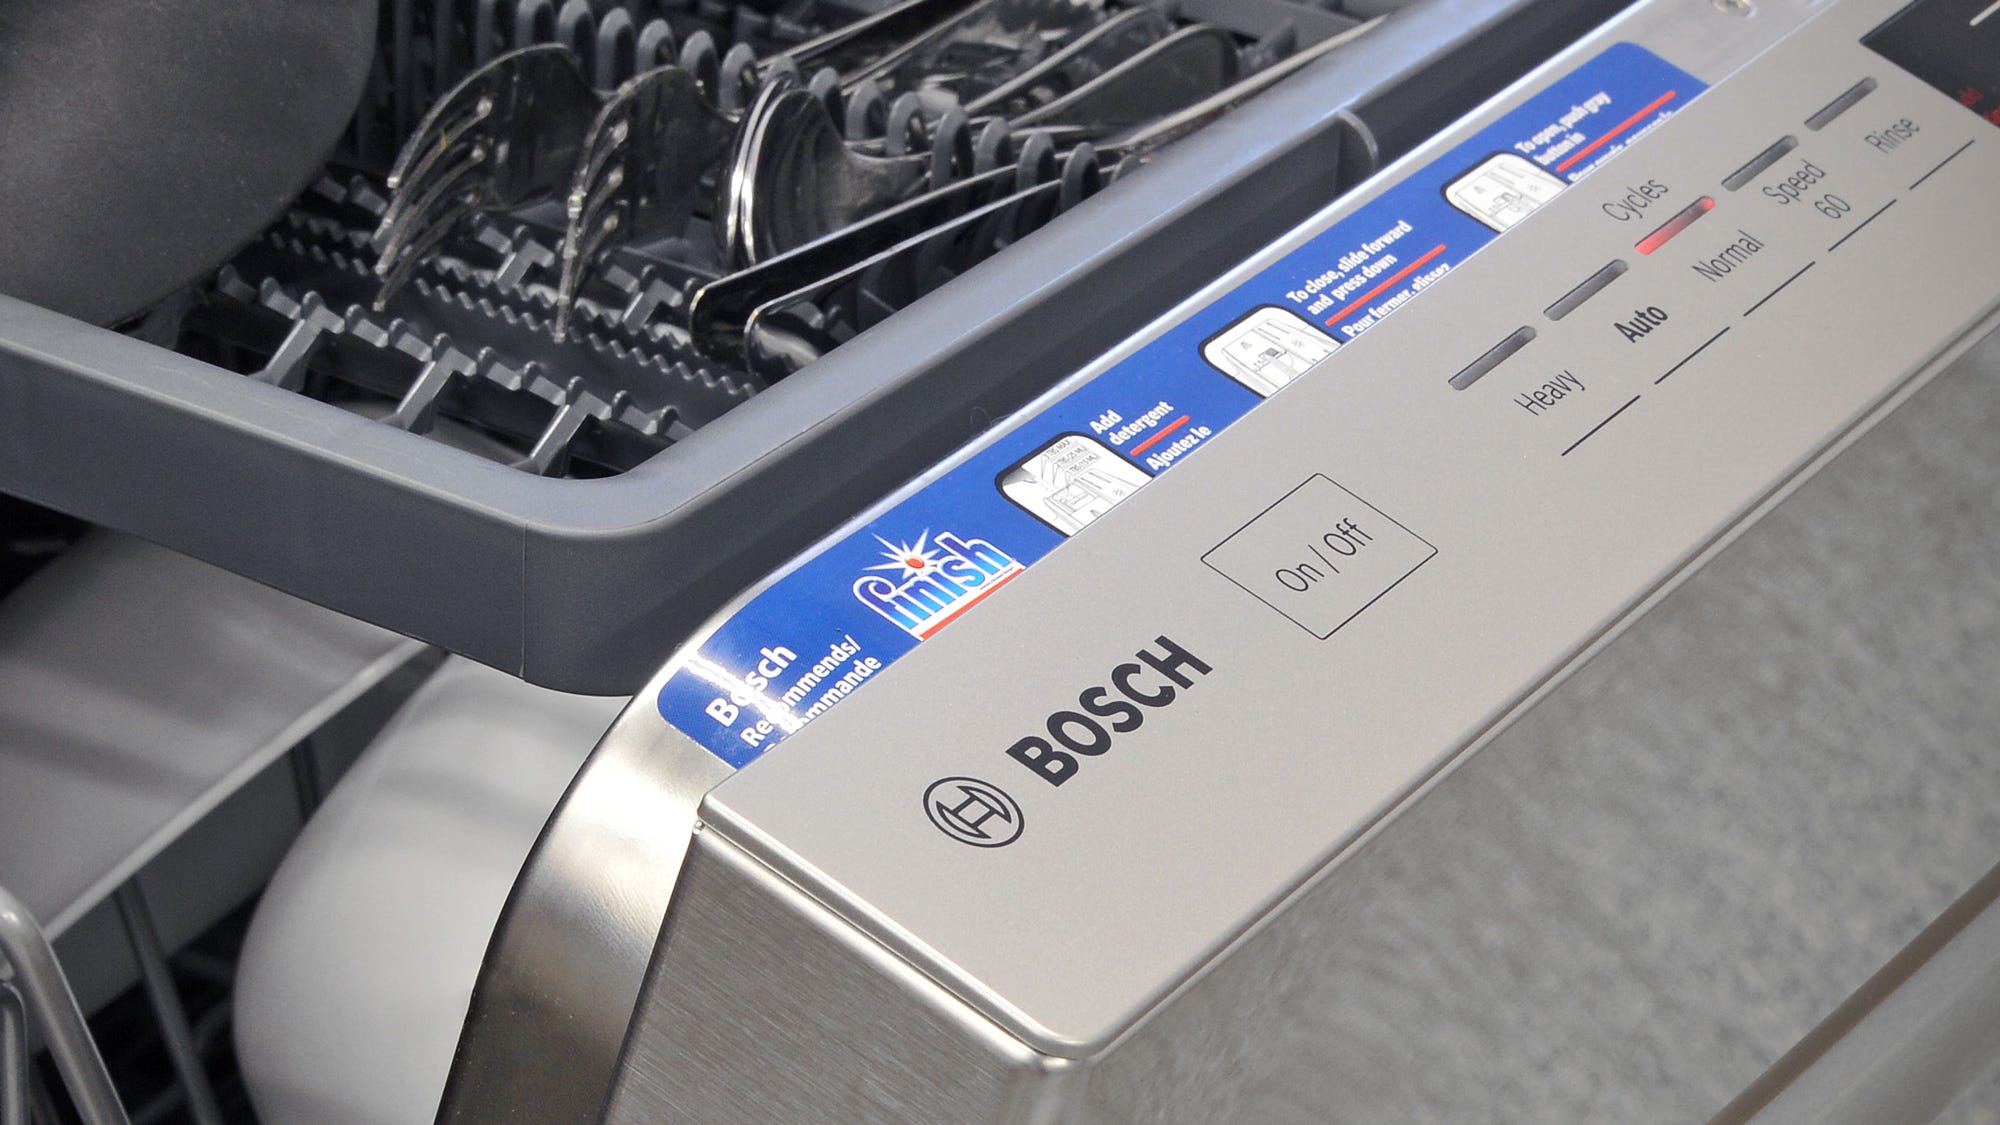 best energy efficient dishwasher 2019